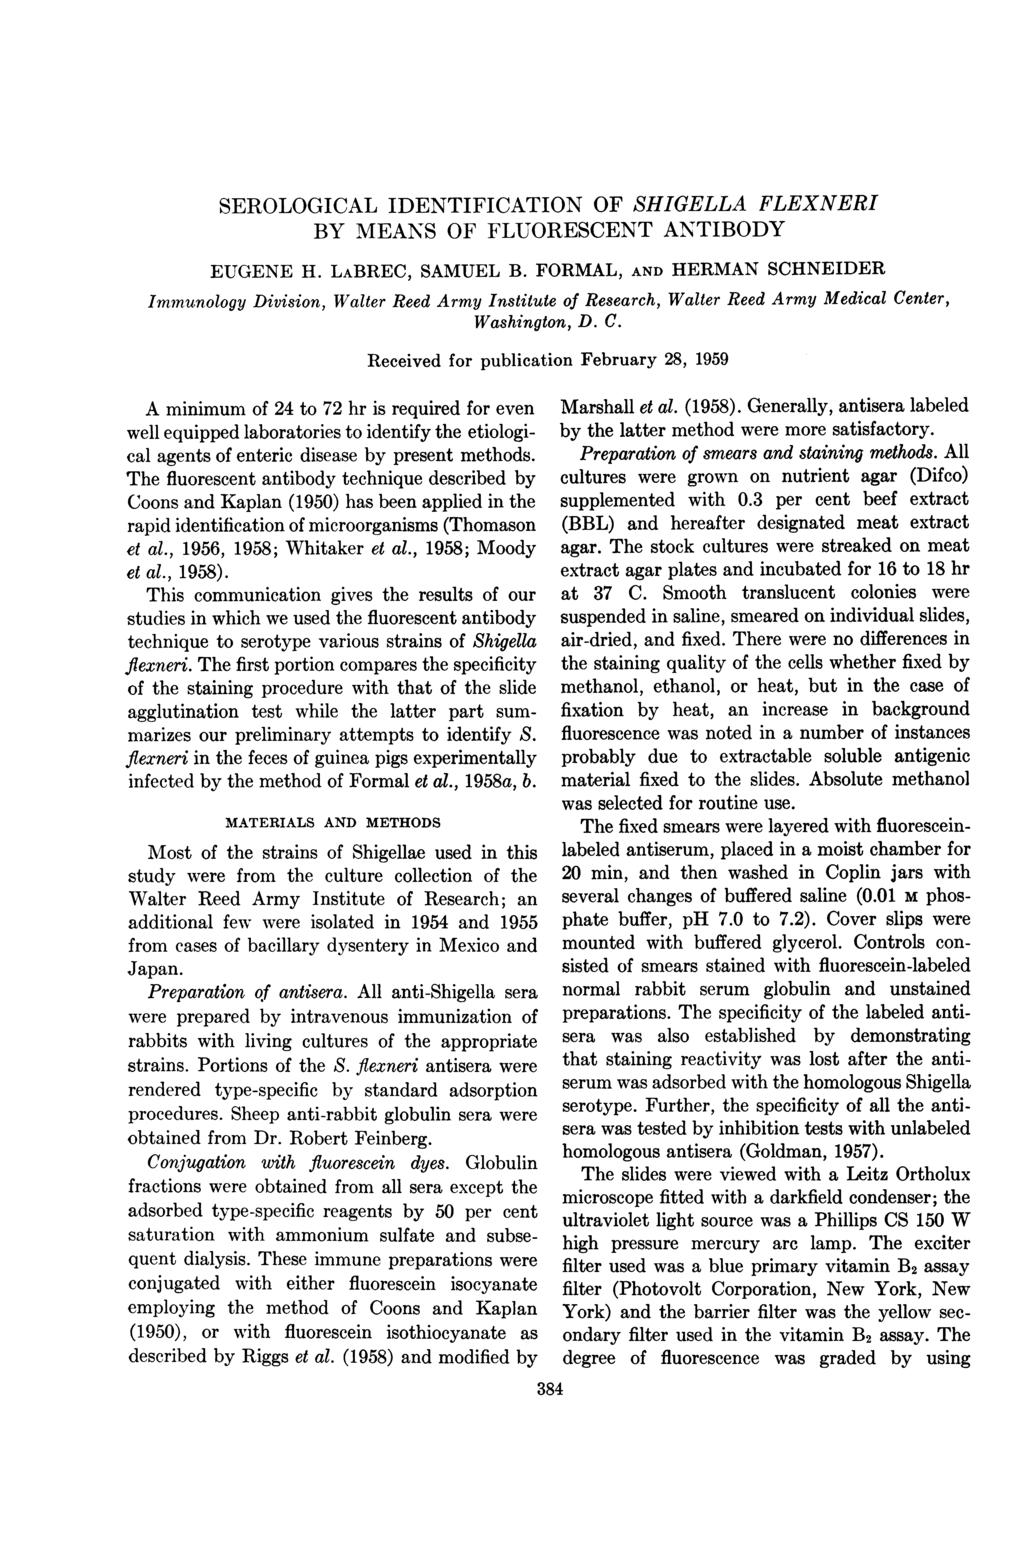 SEROLOGICAL IDENTIFICATION OF SHIGELLA FLEXNERI BY MEANS OF FLUORESCENT ANTIBODY EUGENE H. LABREC, SAMUEL B.